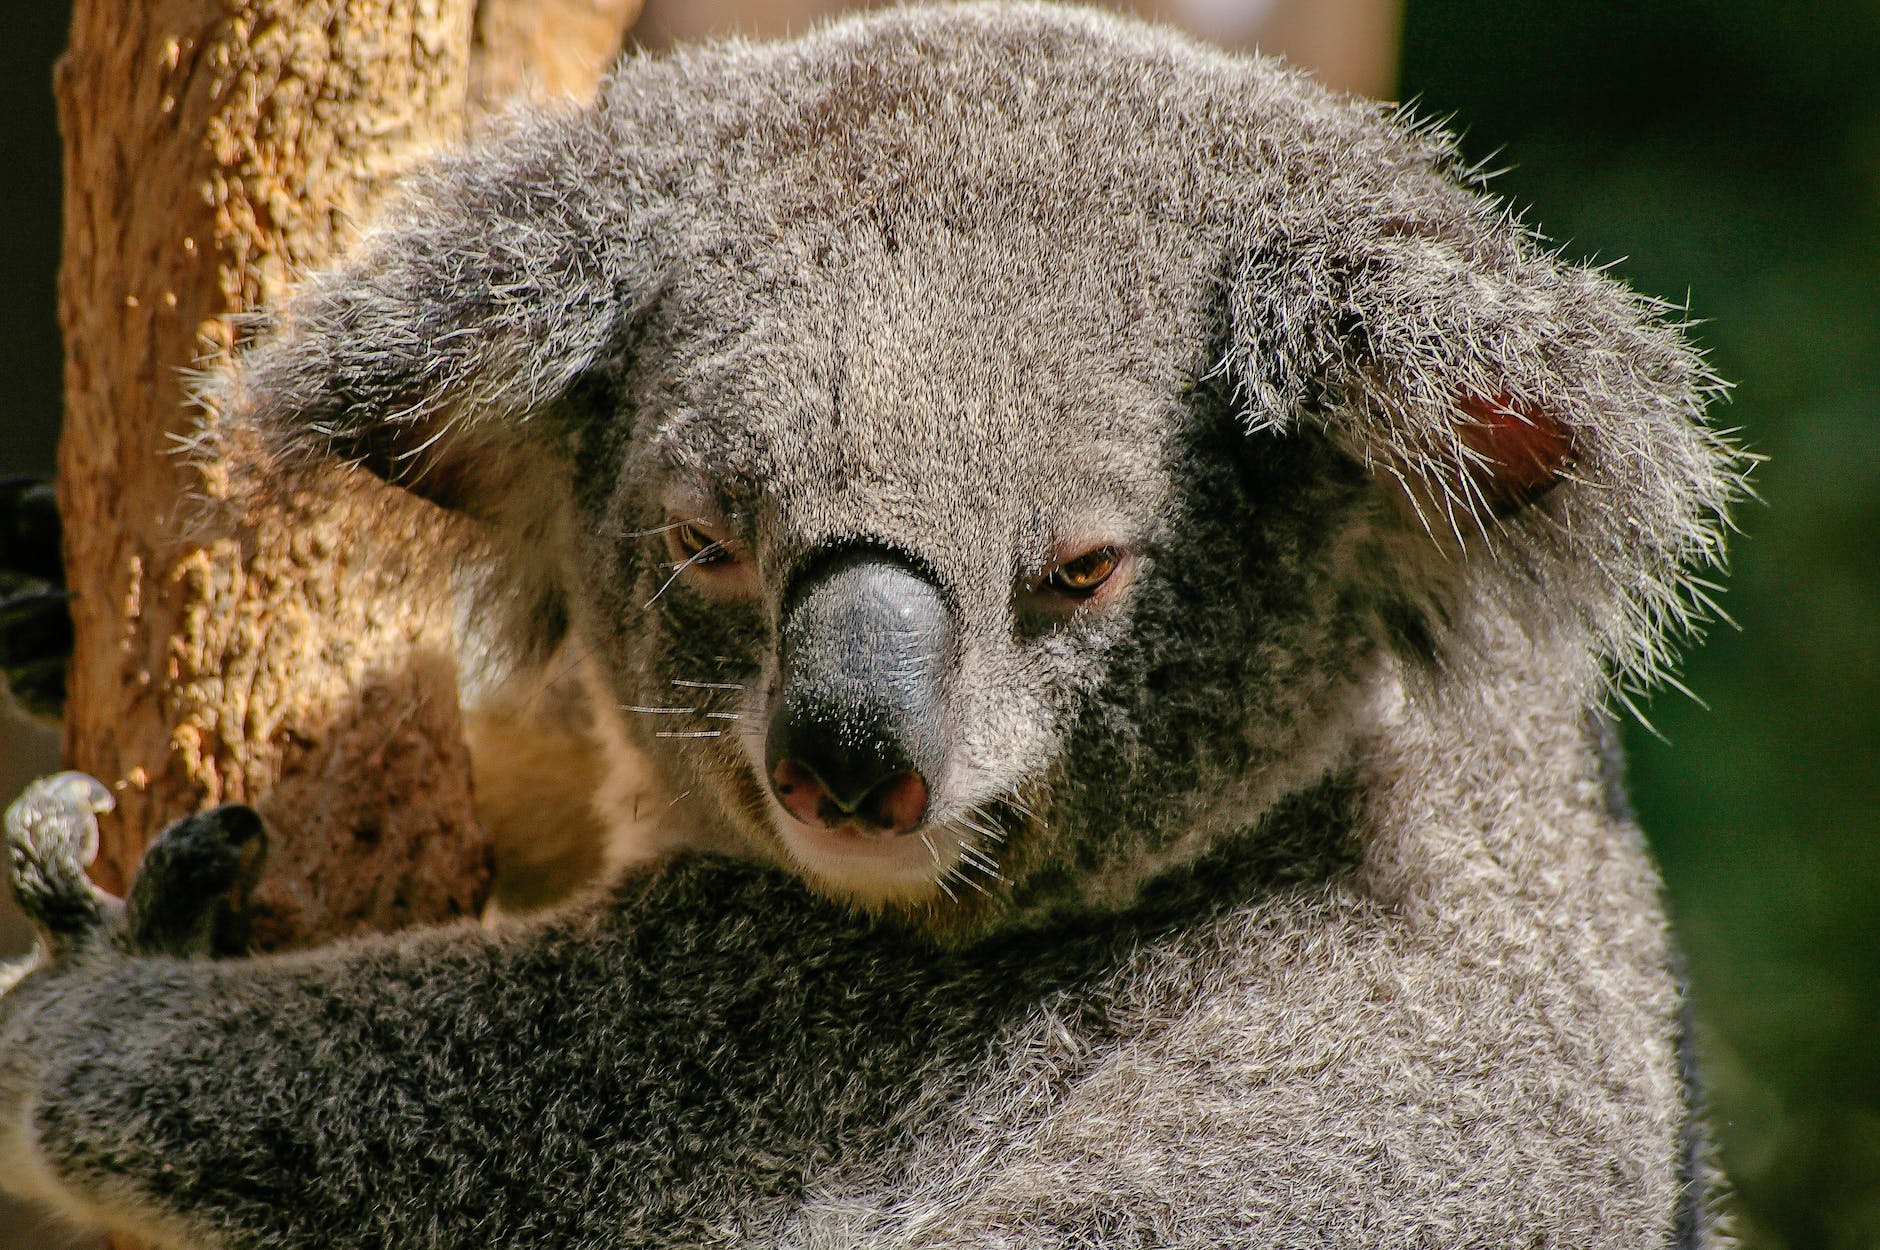 close up photo of angry looking koala